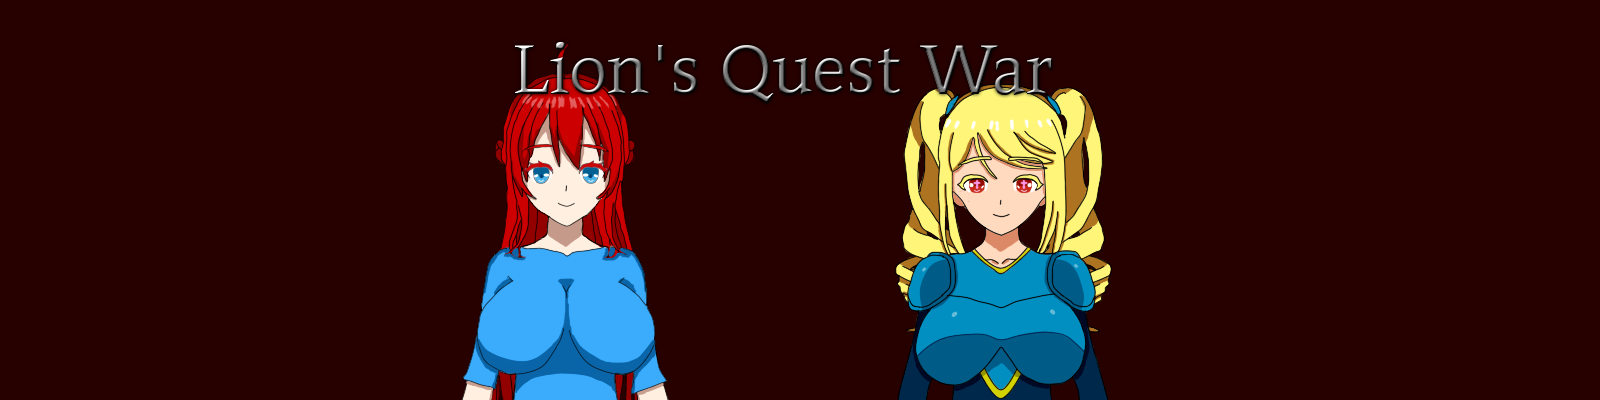 Lion's Quest War v.0.10